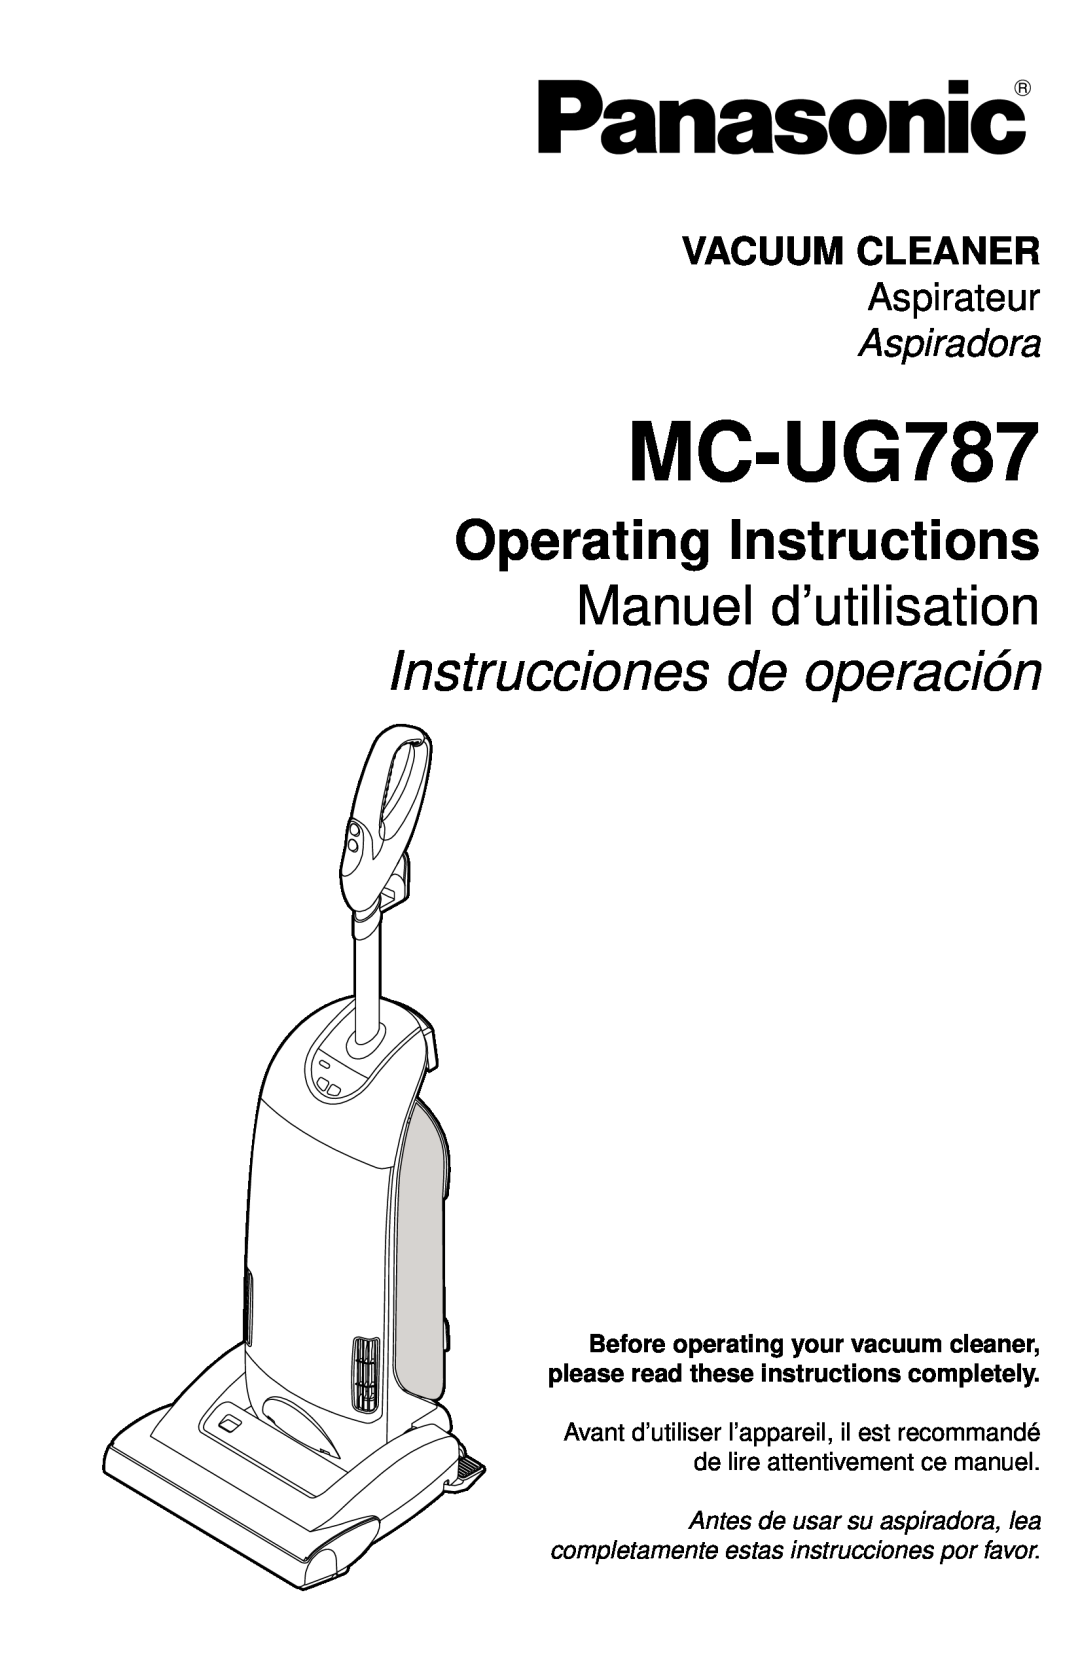 Panasonic MC-UG787 manuel dutilisation Vacuum Cleaner, Aspirateur, Aspiradora 